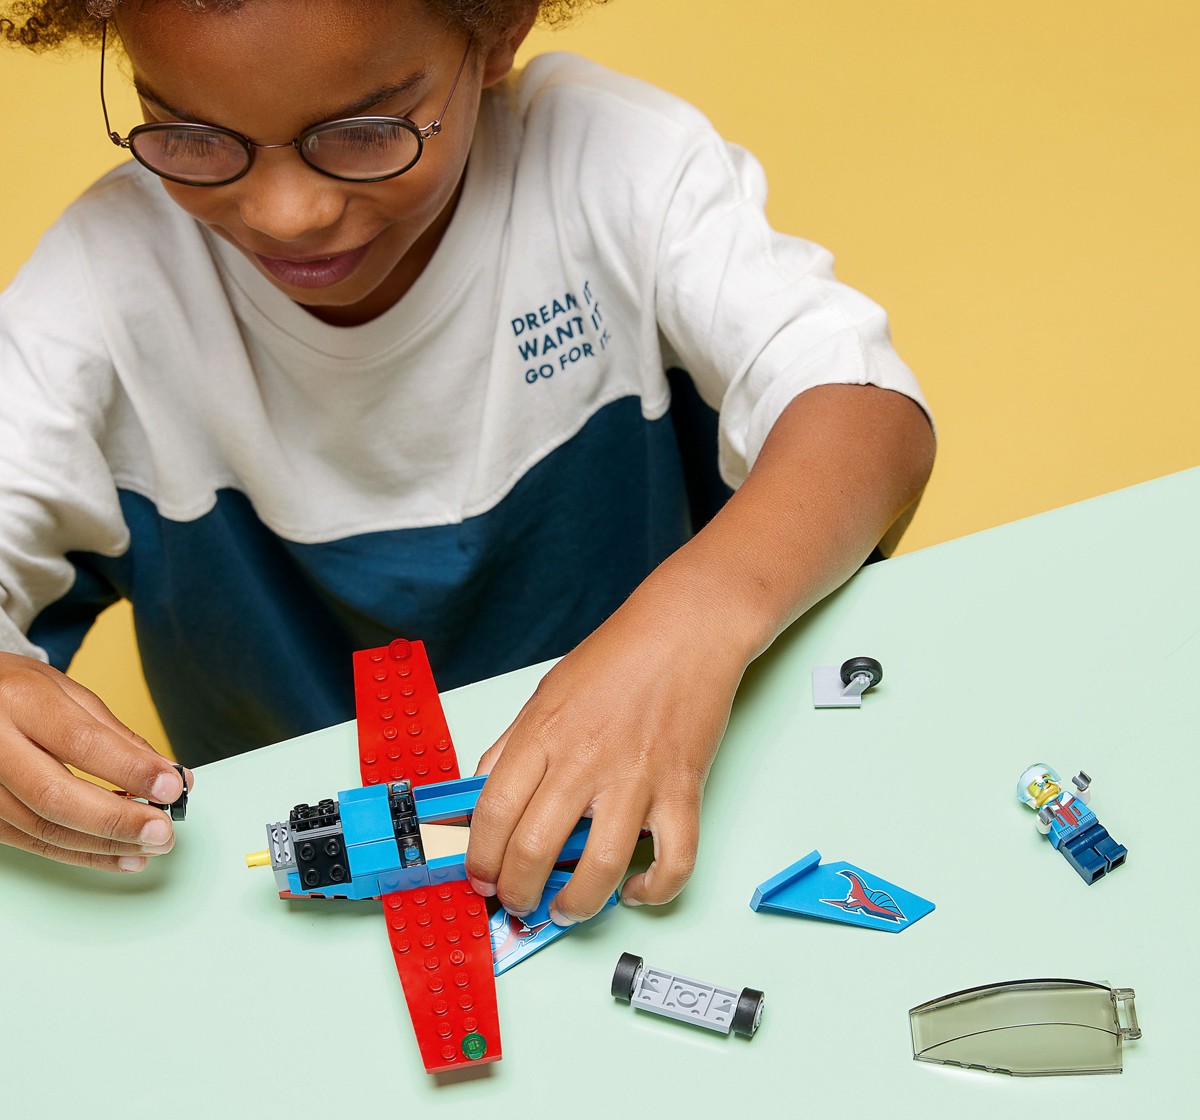 Lego 60323 Stunt Plane Building Blocks Multicolour 5Y+